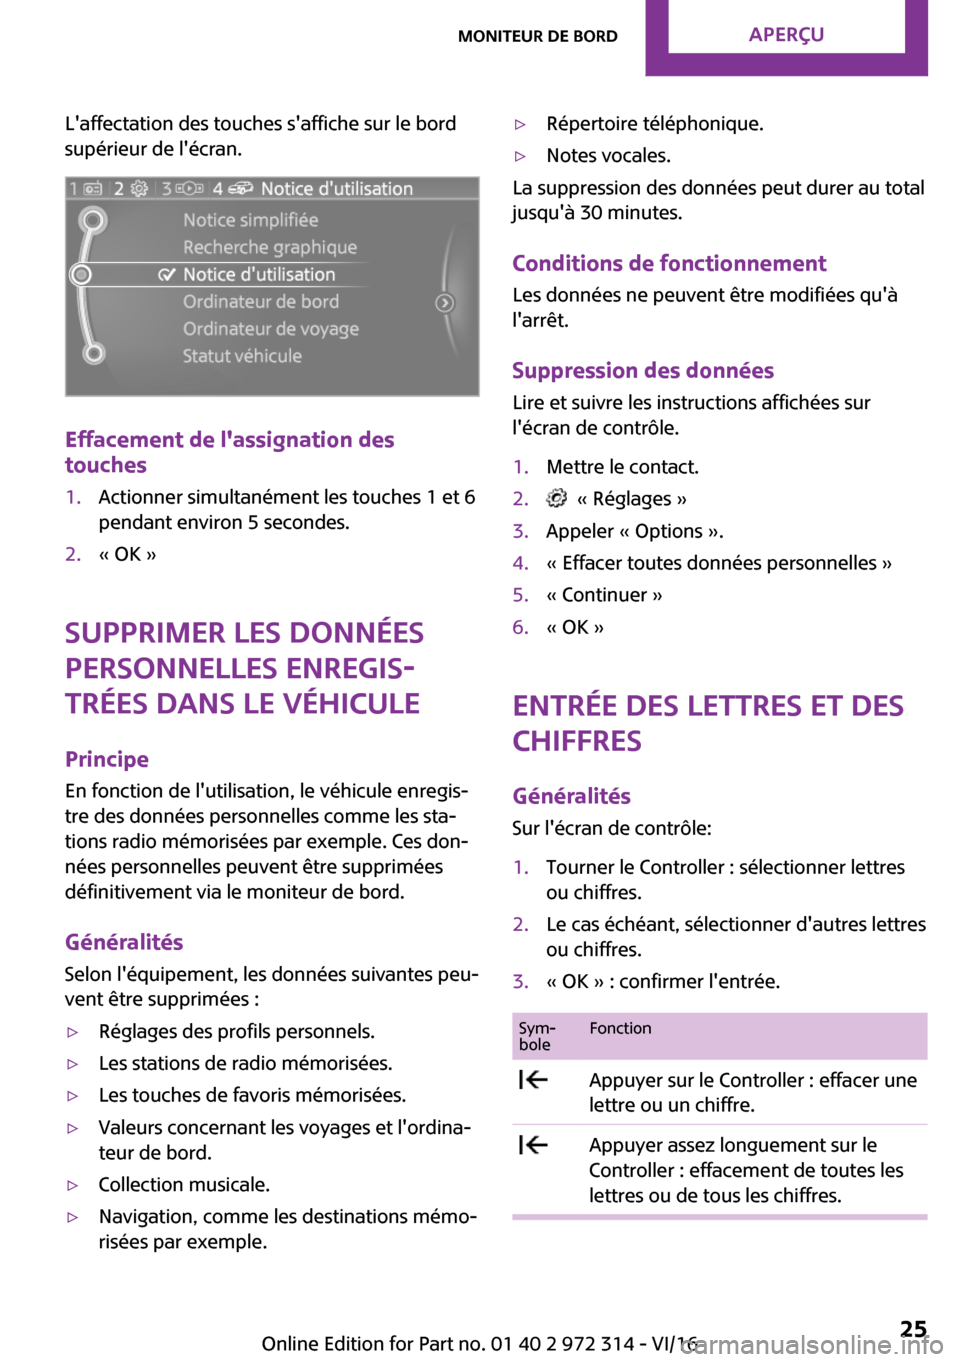 MINI 5 door 2016  Manuel du propriétaire (in French) �L��a�f�f�e�c�t�a�t�i�o�n� �d�e�s� �t�o�u�c�h�e�s� �s��a�f�f�i�c�h�e� �s�u�r� �l�e� �b�o�r�d
�s�u�p�é�r�i�e�u�r� �d�e� �l��é�c�r�a�n�.
�E�f�f�a�c�e�m�e�n�t��d�e��l��a�s�s�i�g�n�a�t�i�o�n��d�e